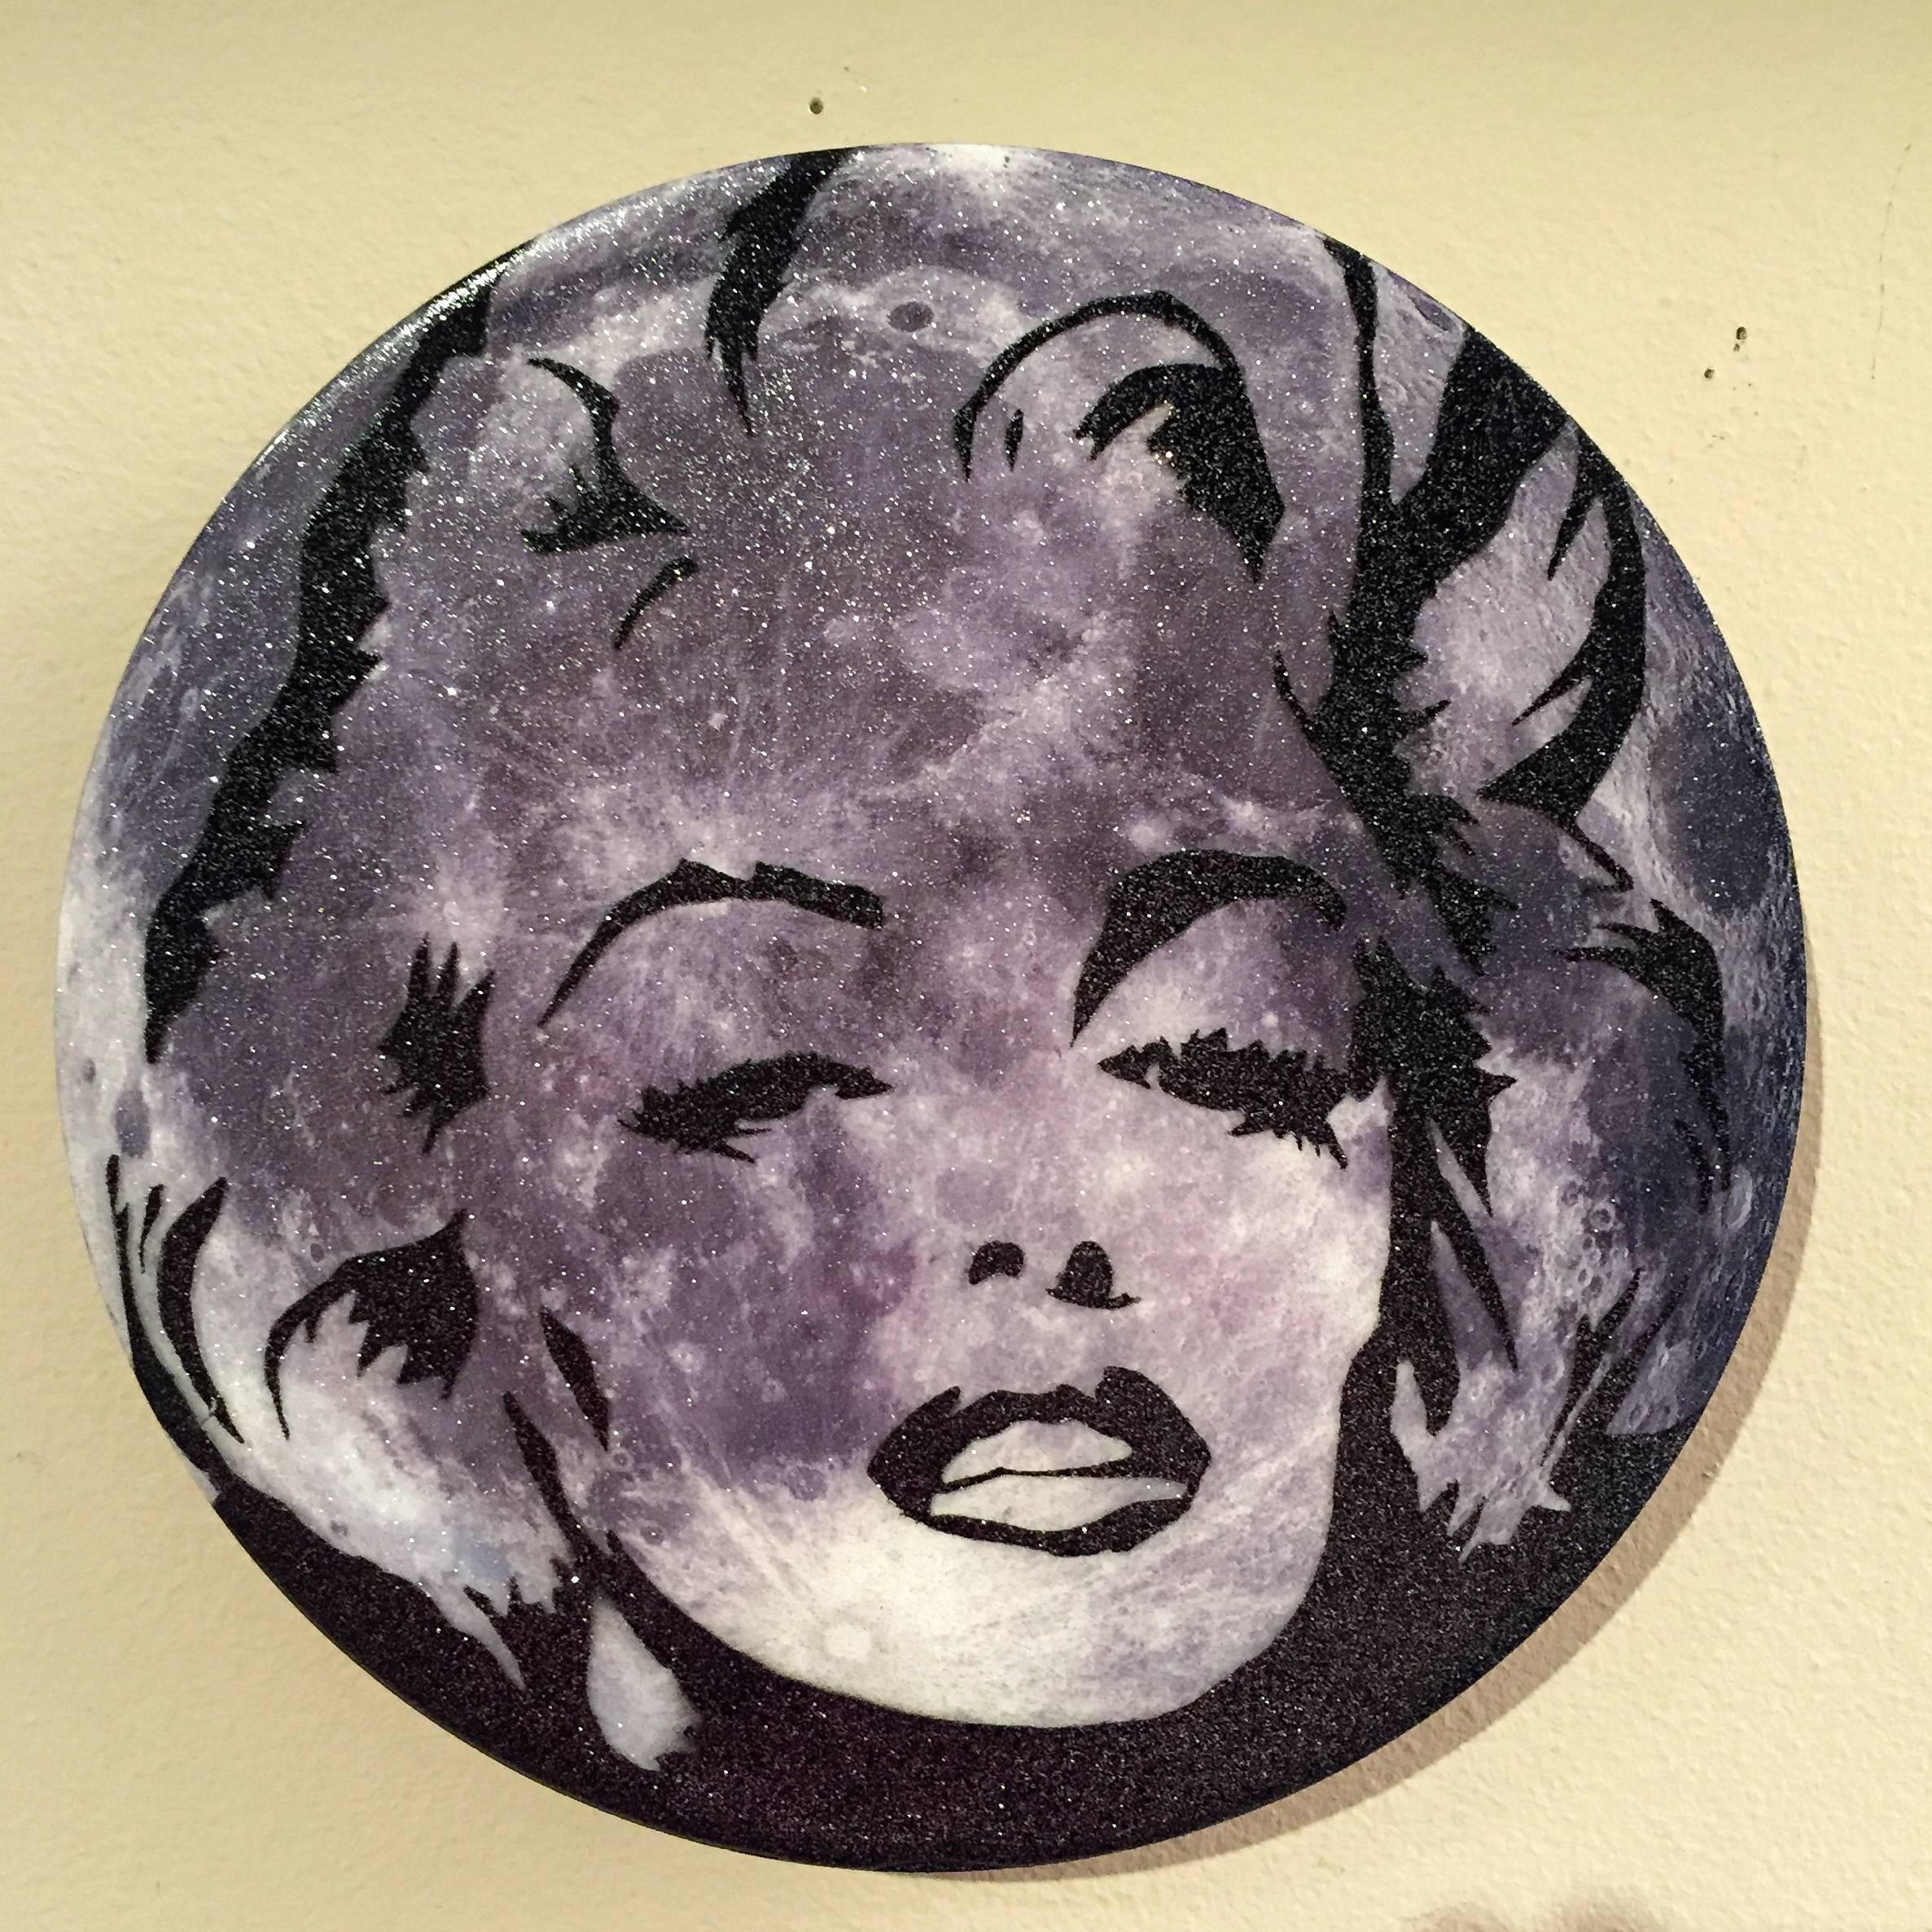 Moon Marilyn - Mixed Media Art by Steven Swancoat